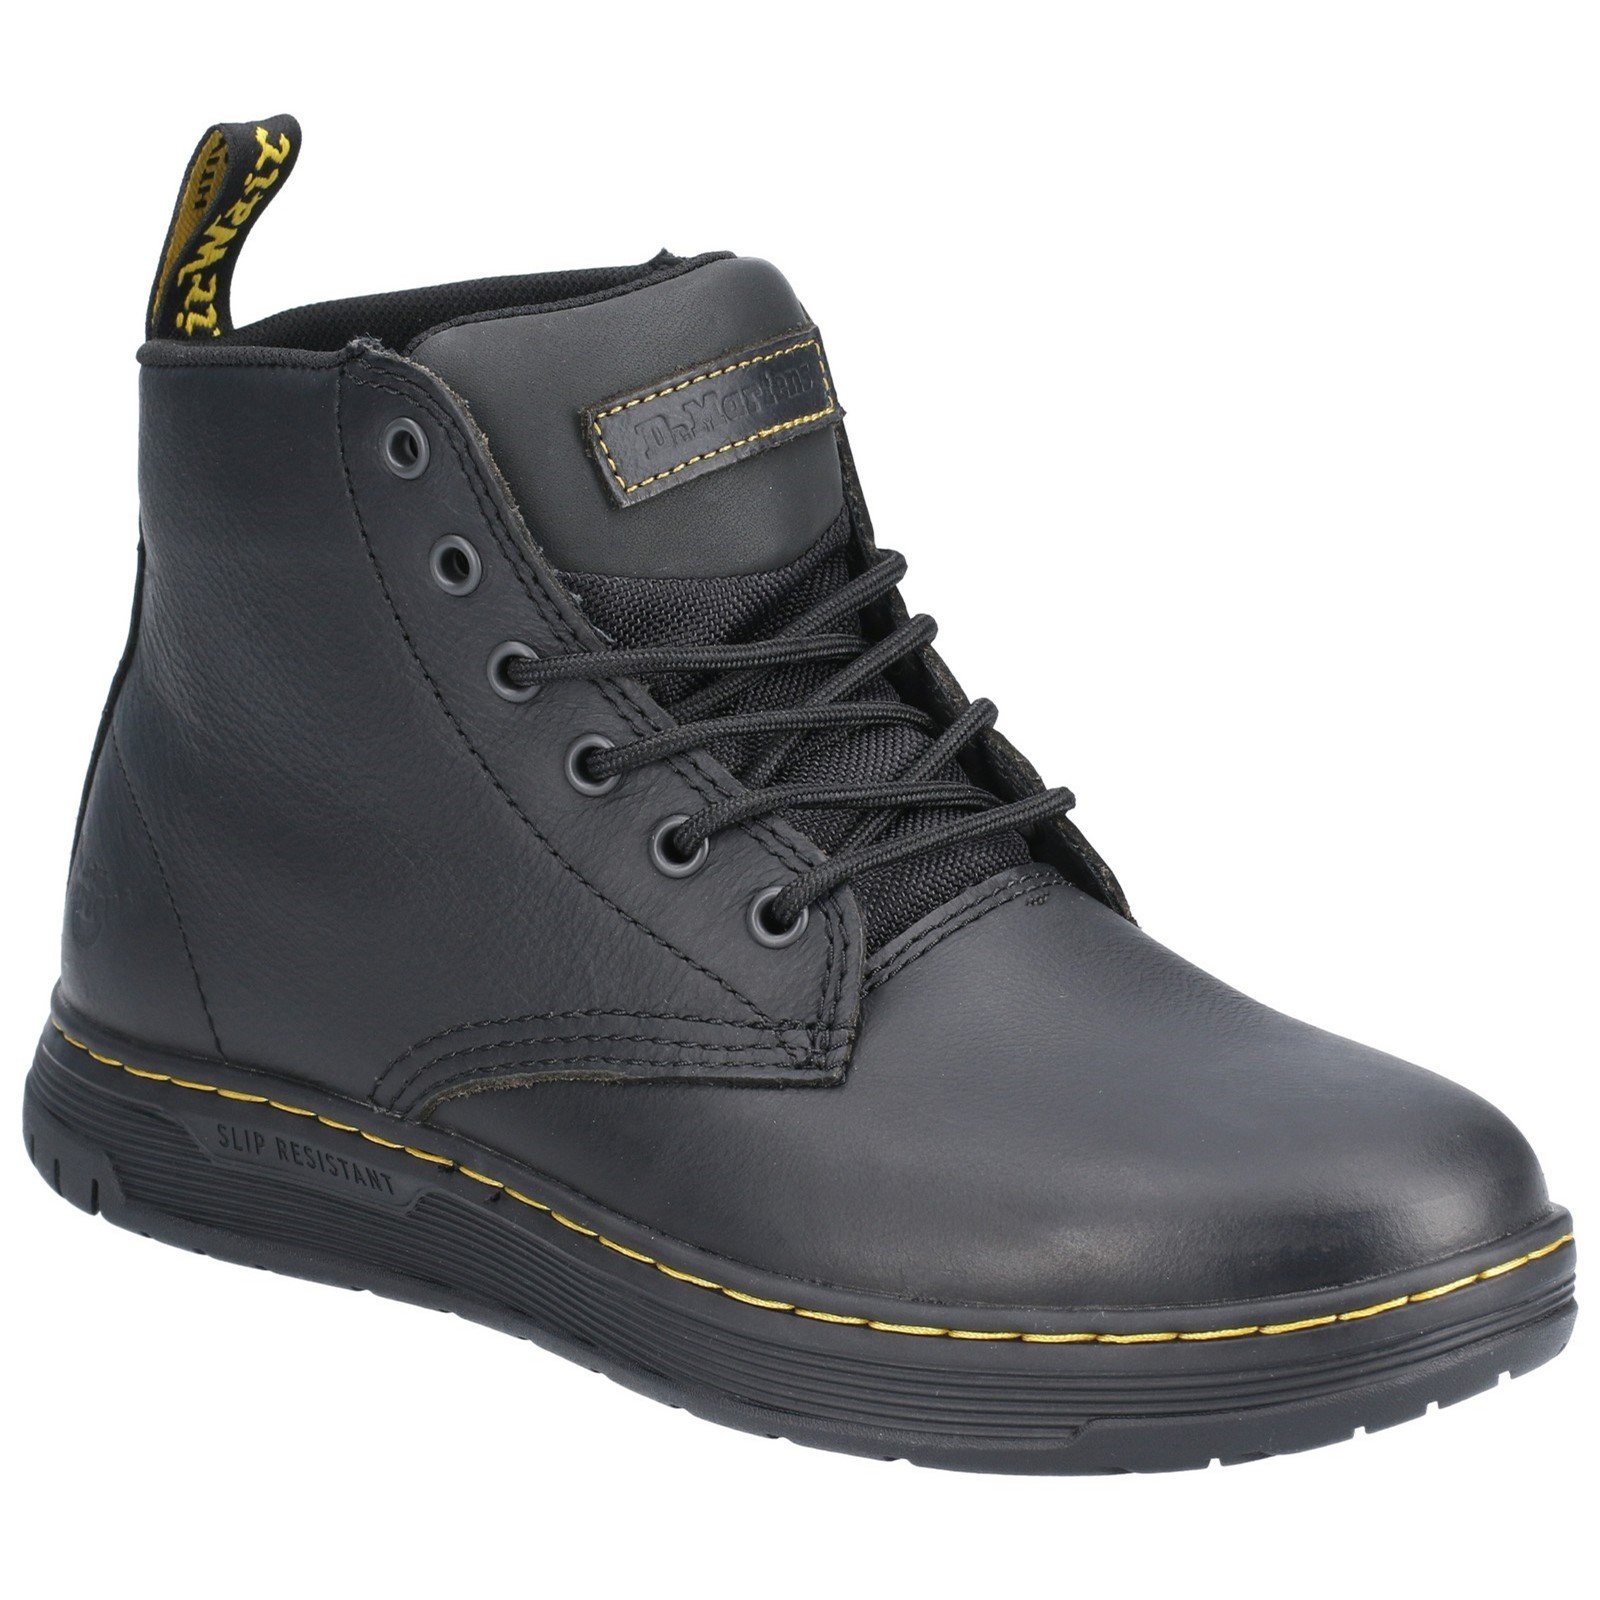 Dr Martens Men's Amwell Slip Resistant Leather Boot Black 29508 - Black 7